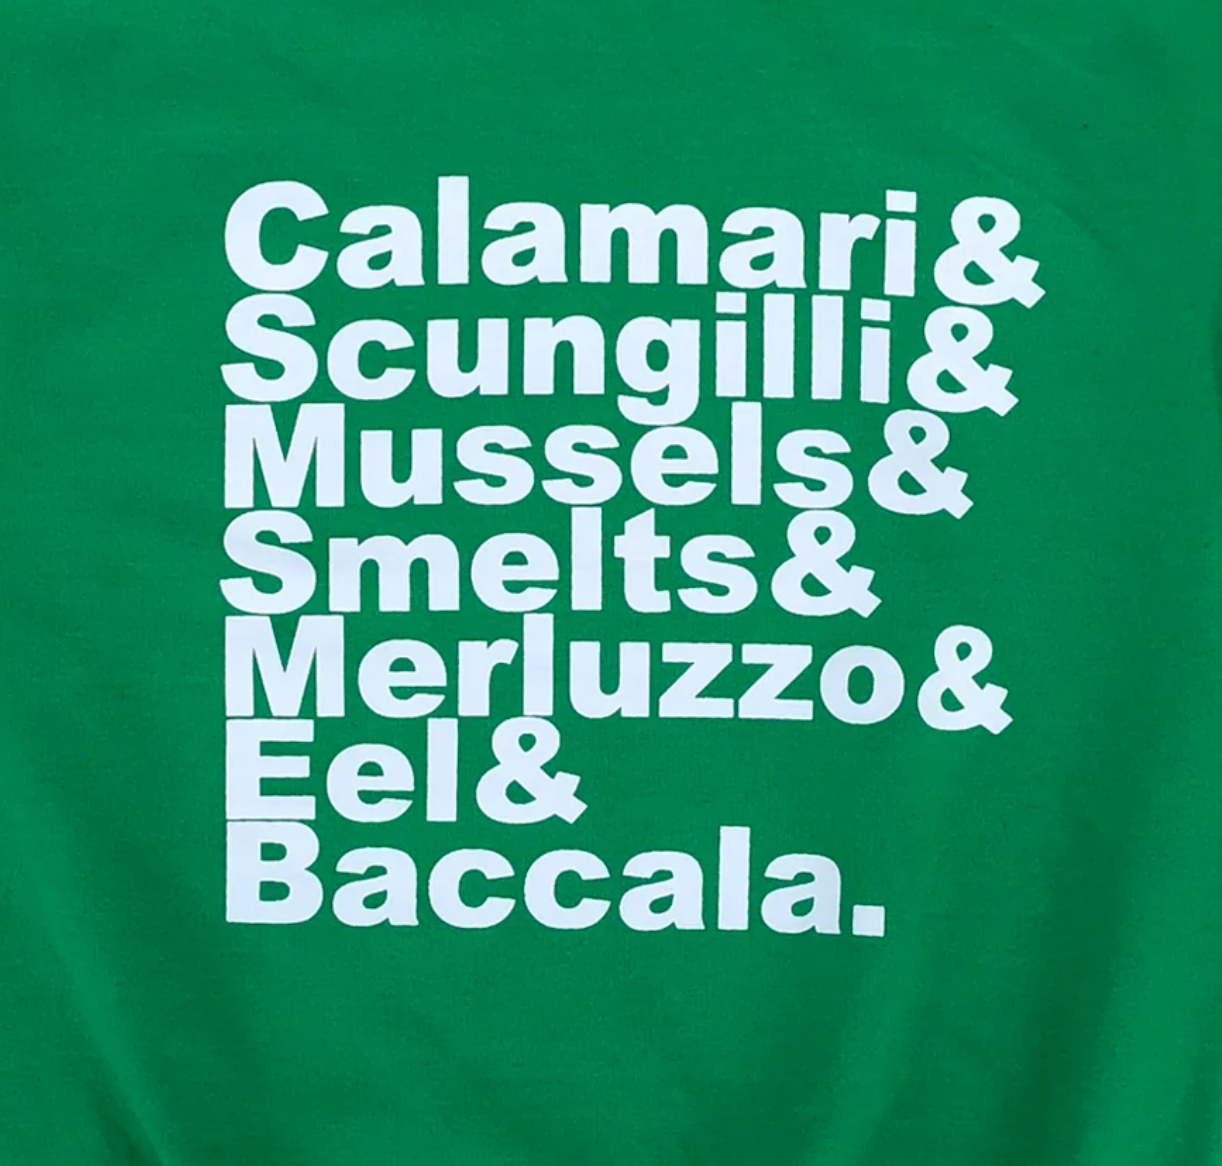 Seven Fishes Sweatshirt (Green)